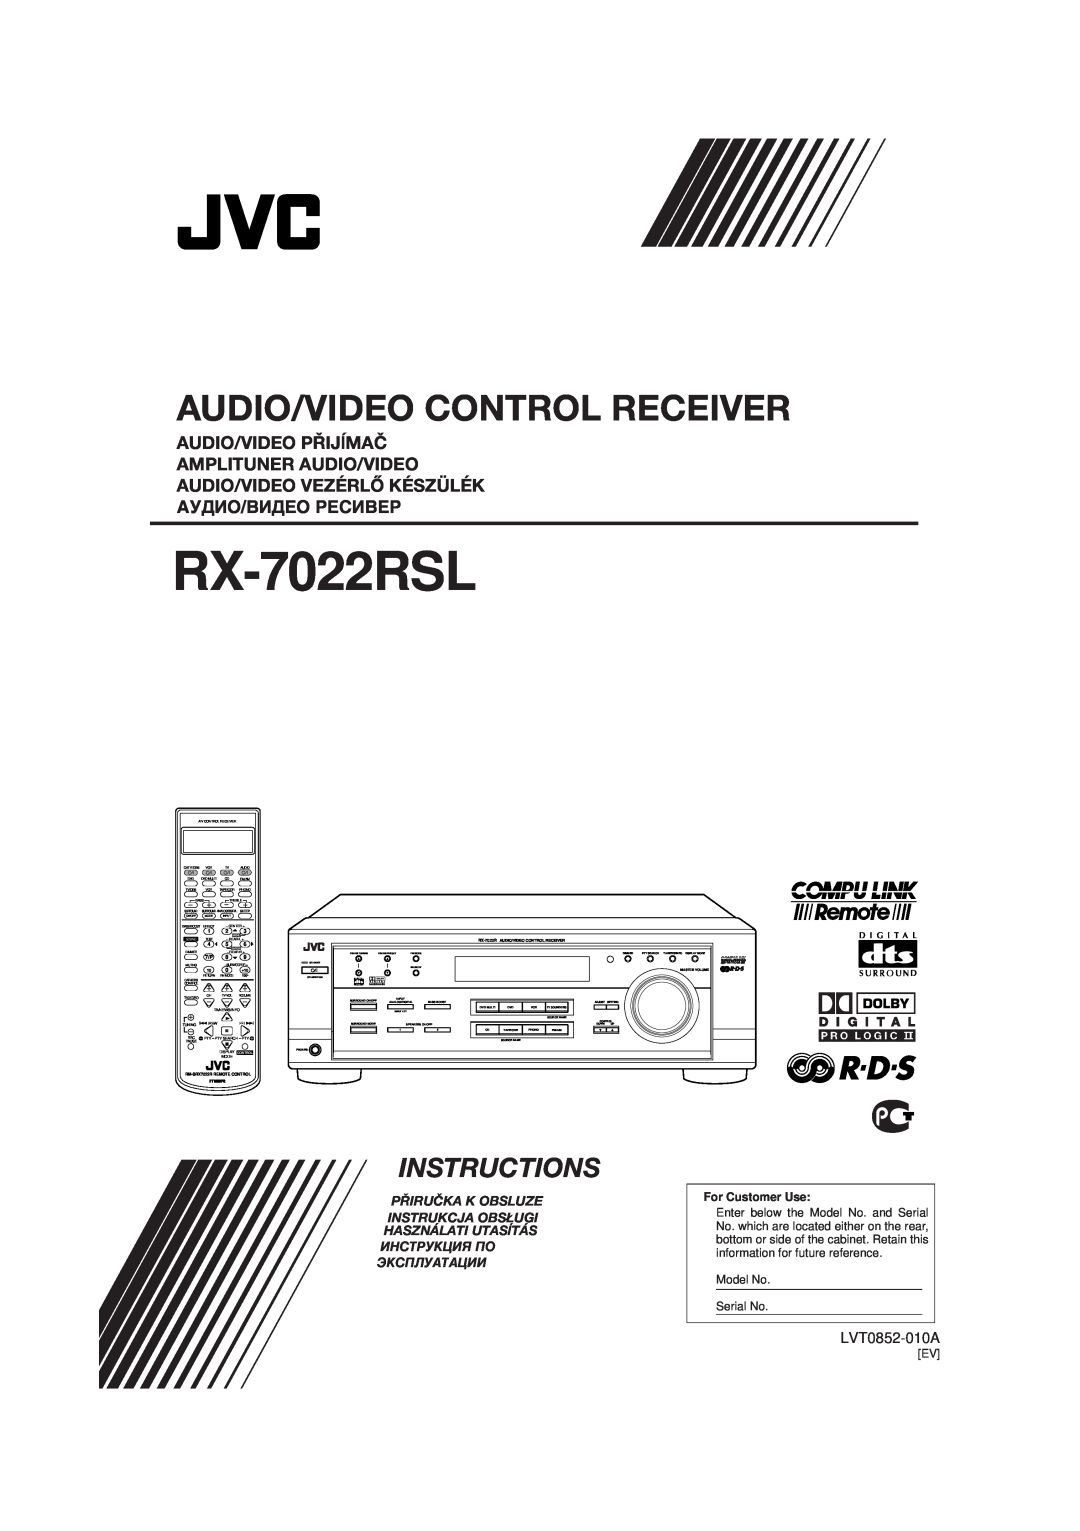 JVC RX-7022RSL manual Audio/Video Control Receiver, Instructions, AUDIO/VIDEO PŘIJĺMAČ, LVT0852-010A, For Customer Use 